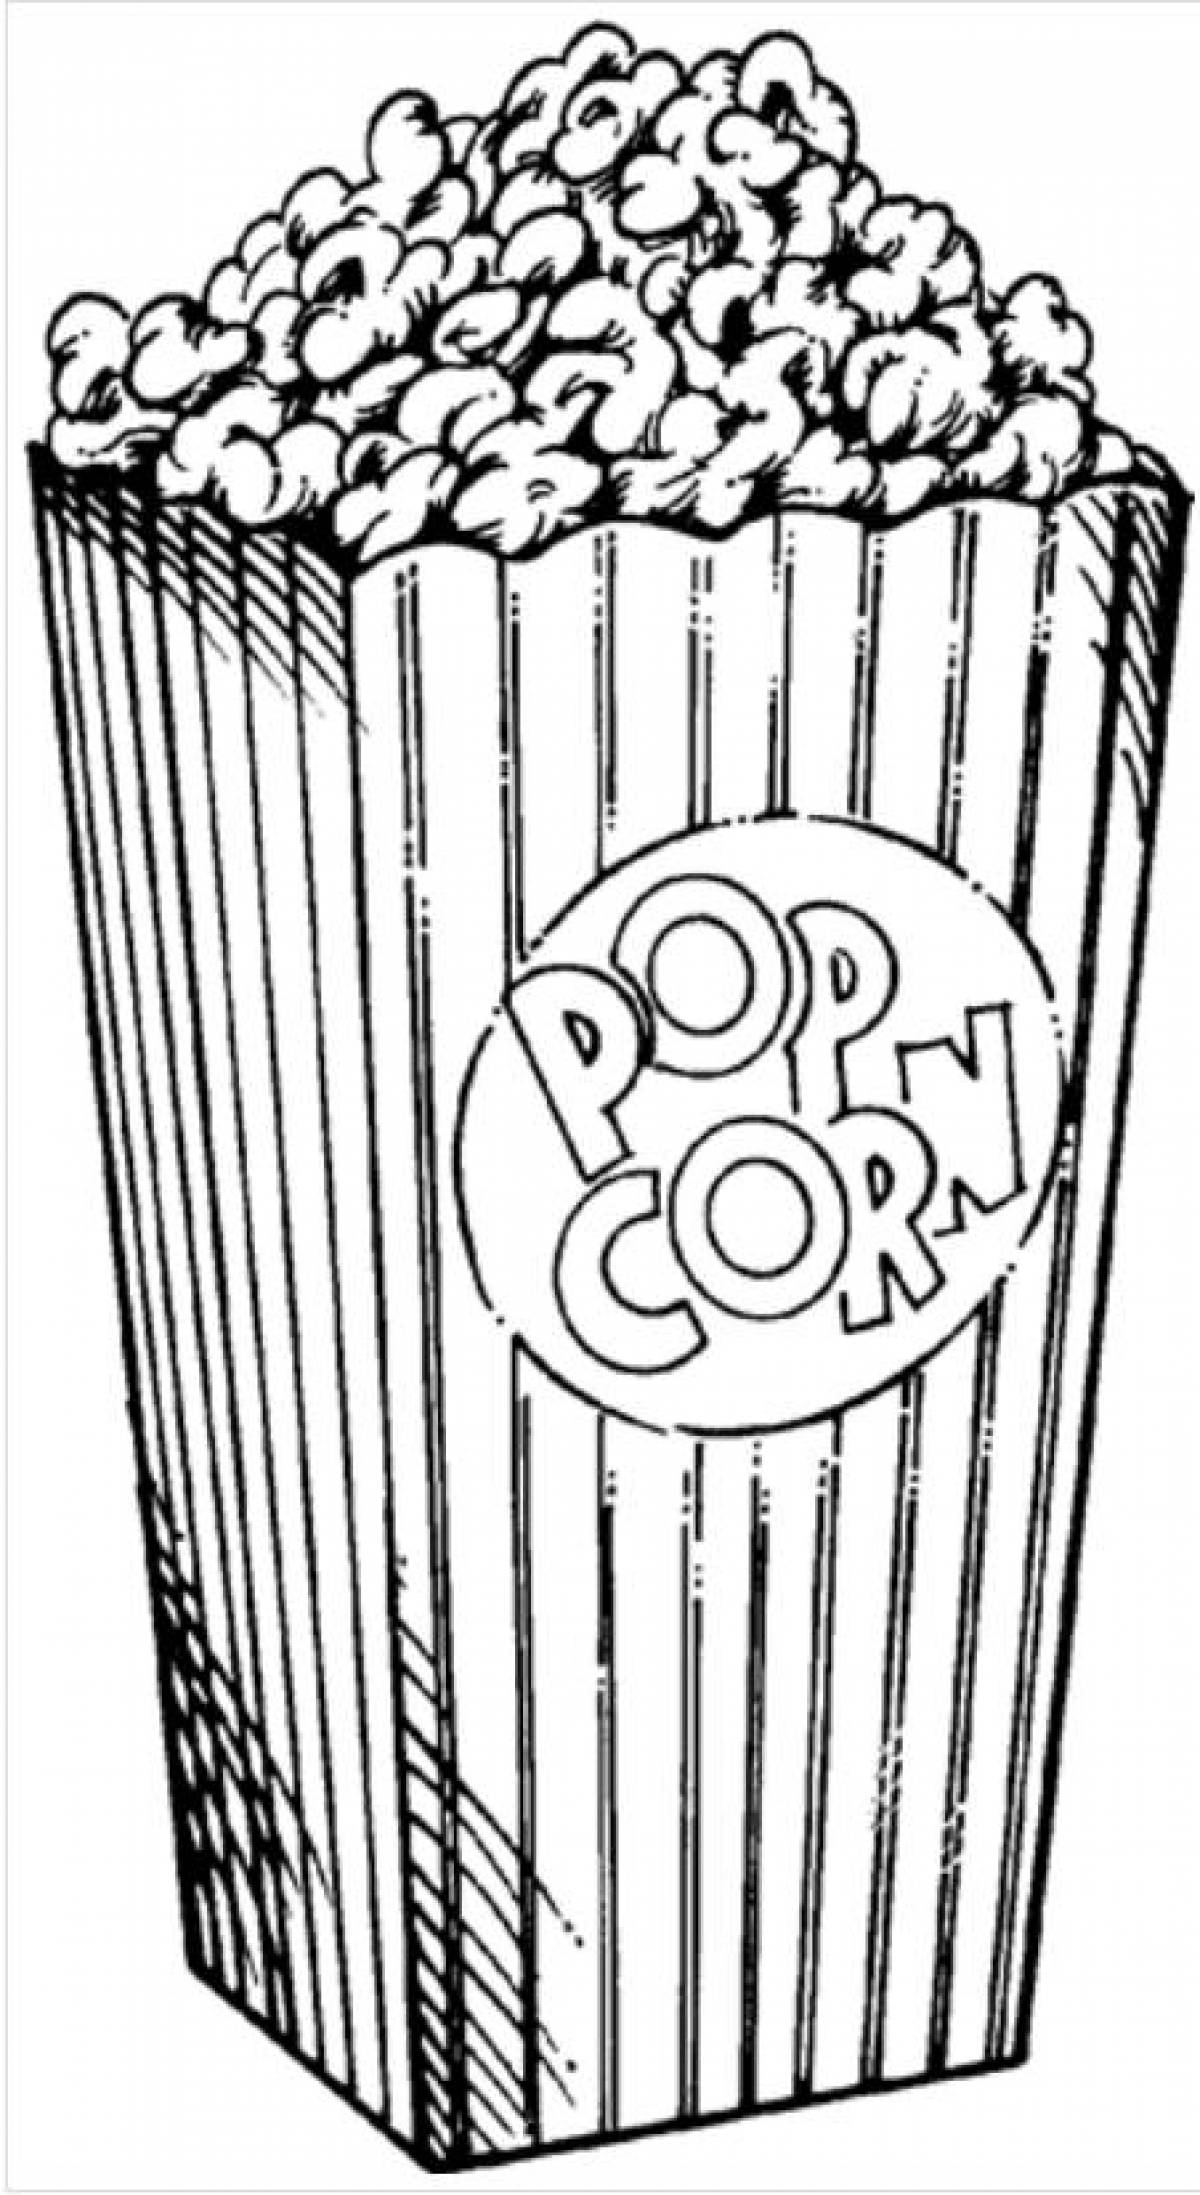 Popcorn coloring book